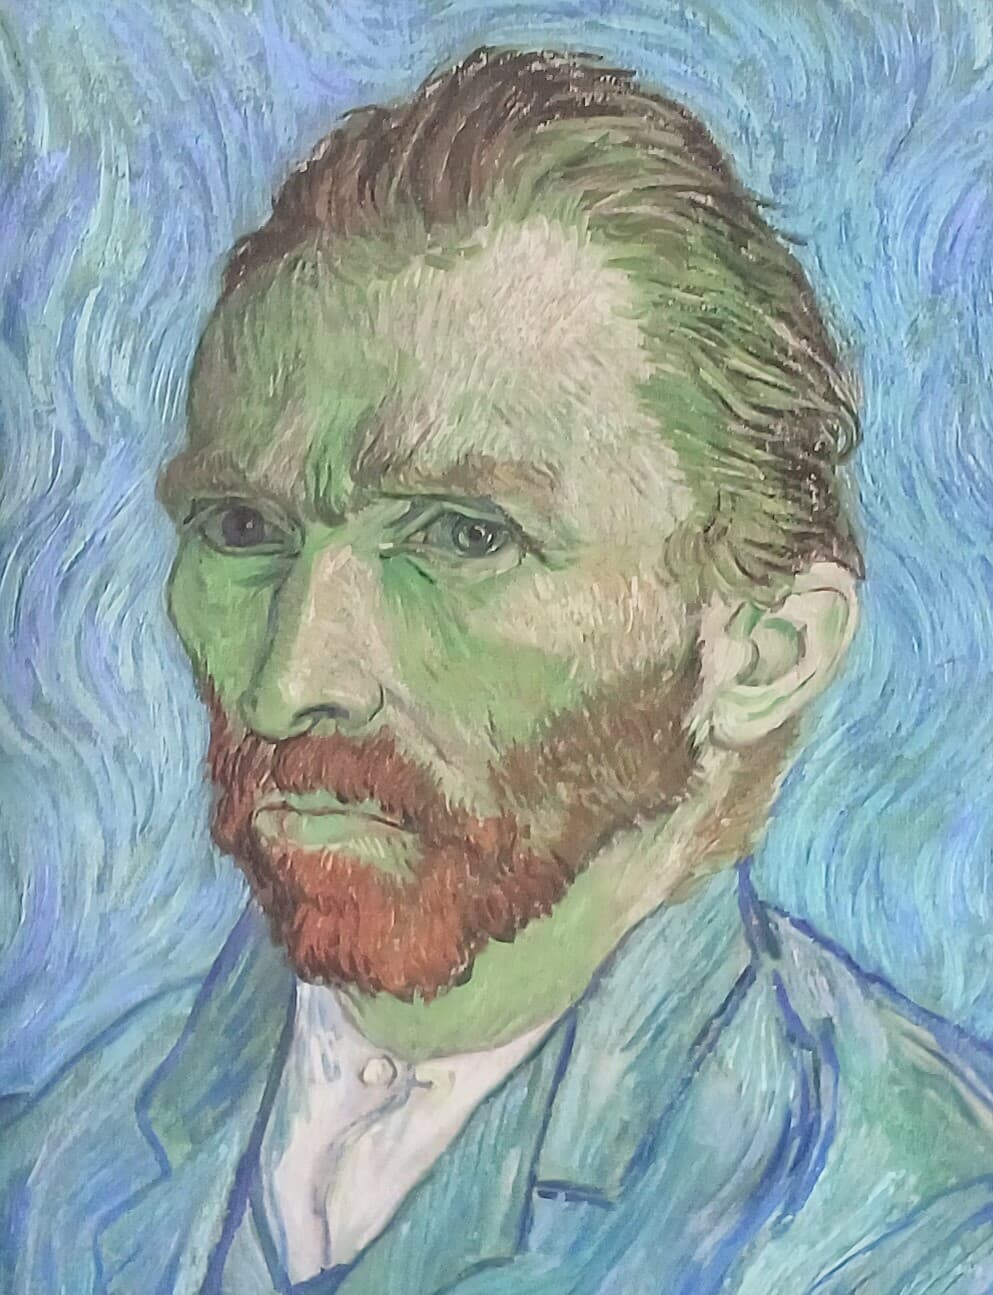 Vincent van Gogh(빈센트 반 고호) 서양화 미술도록 -280/305/35,409쪽,하드커버,큰책-최상급-